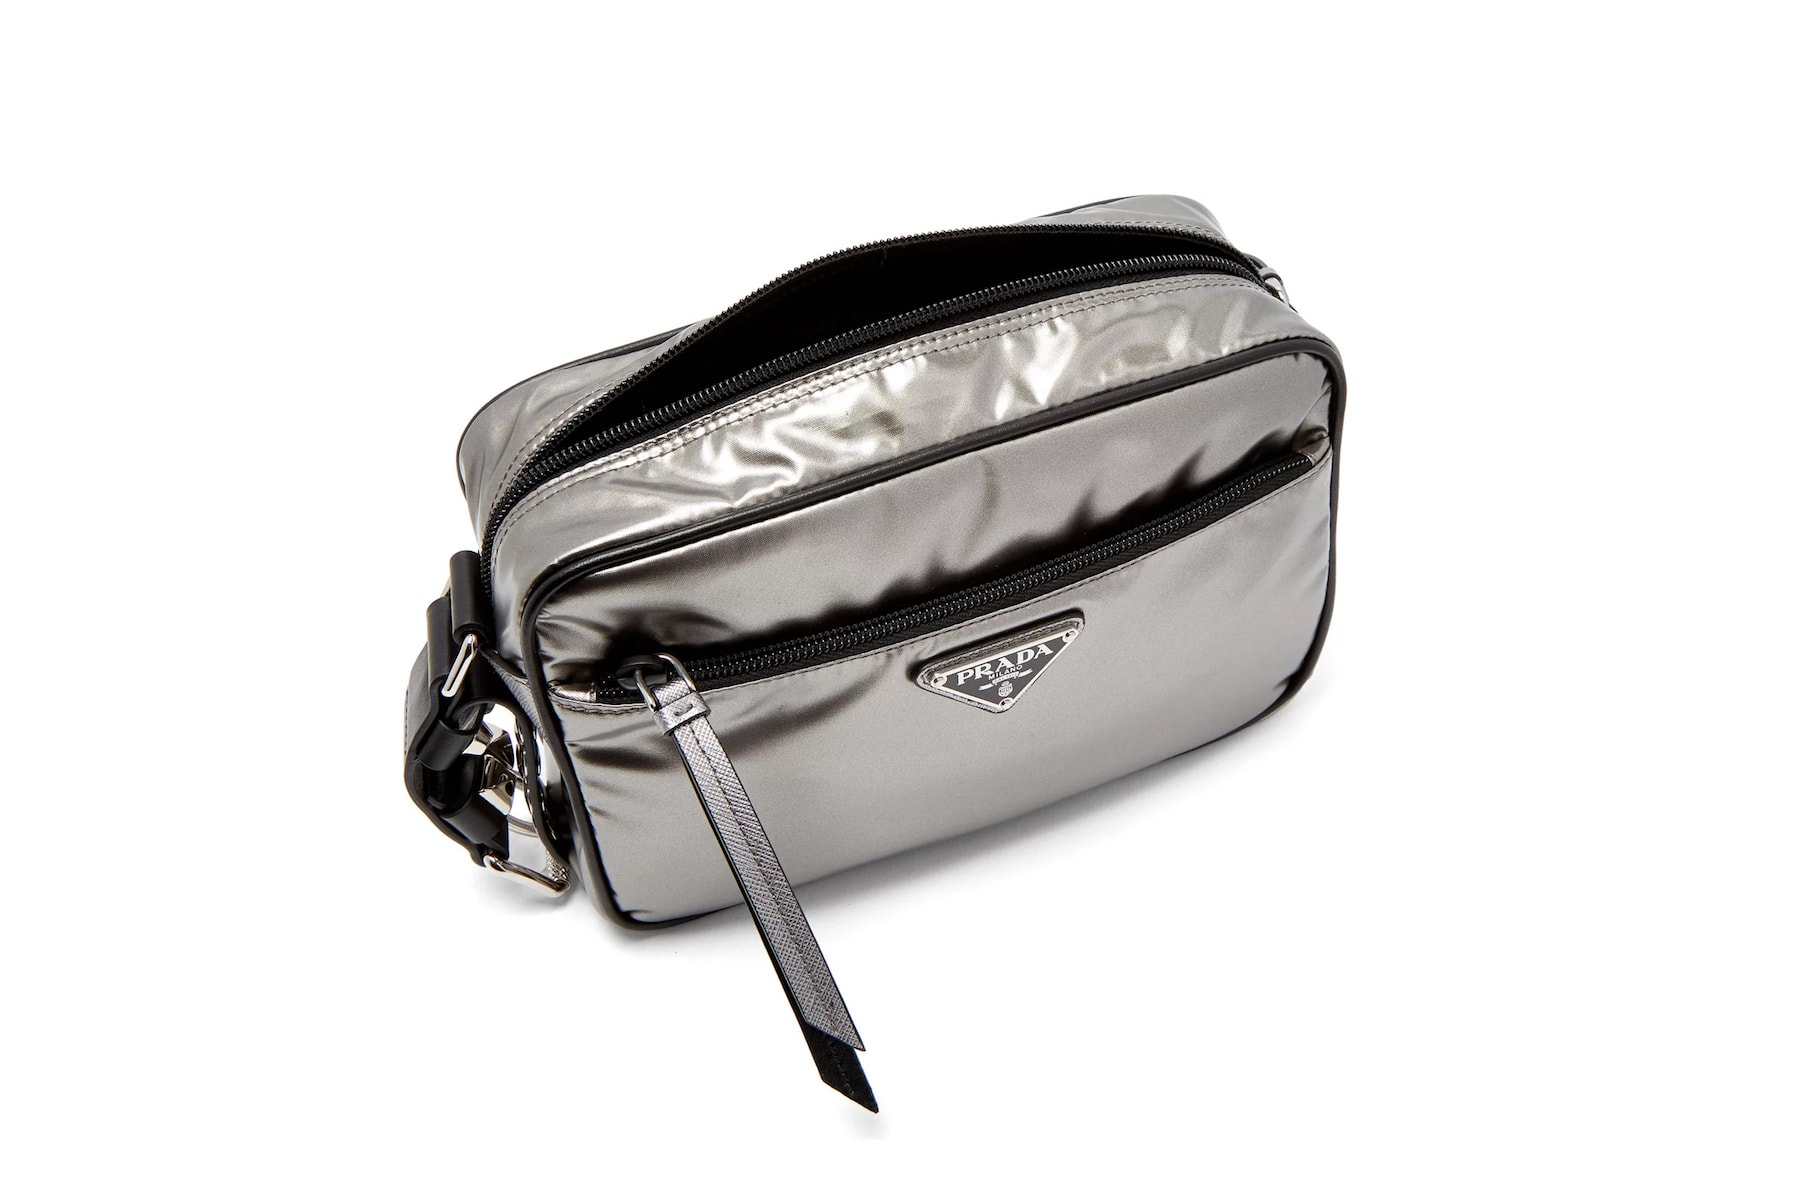 Prada's New Silver Nylon Cross-Body Bag Stud Strap Shiny Reflective